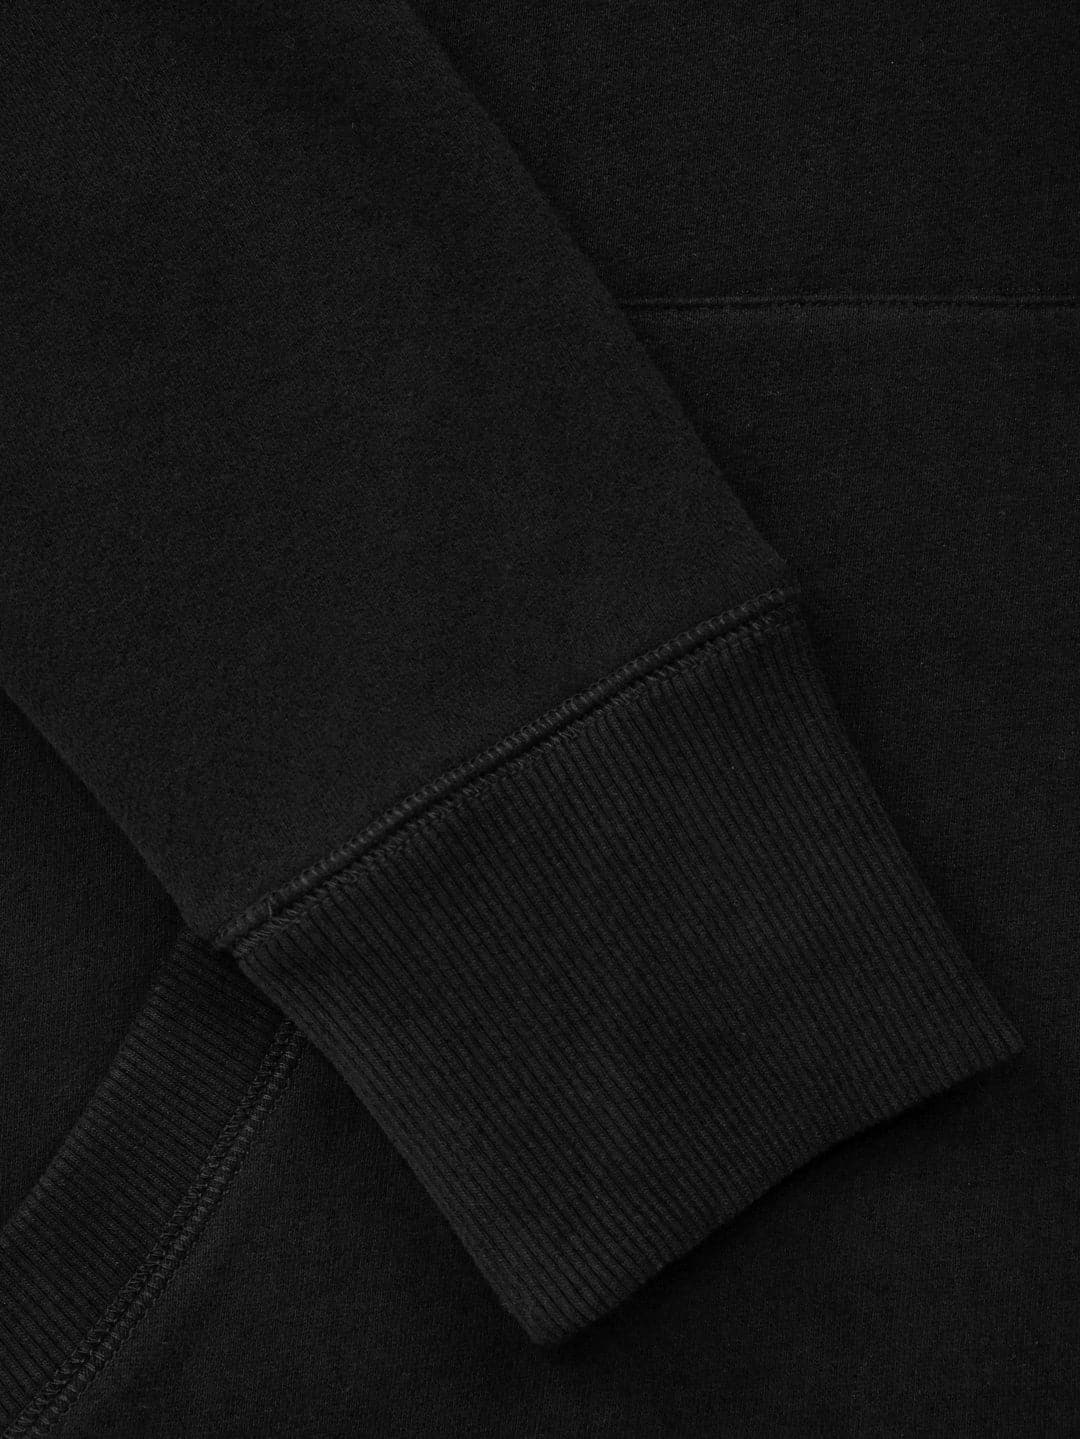 Bluza z kapturem HILLTOP BLACK - Pitbull West Coast International Store 